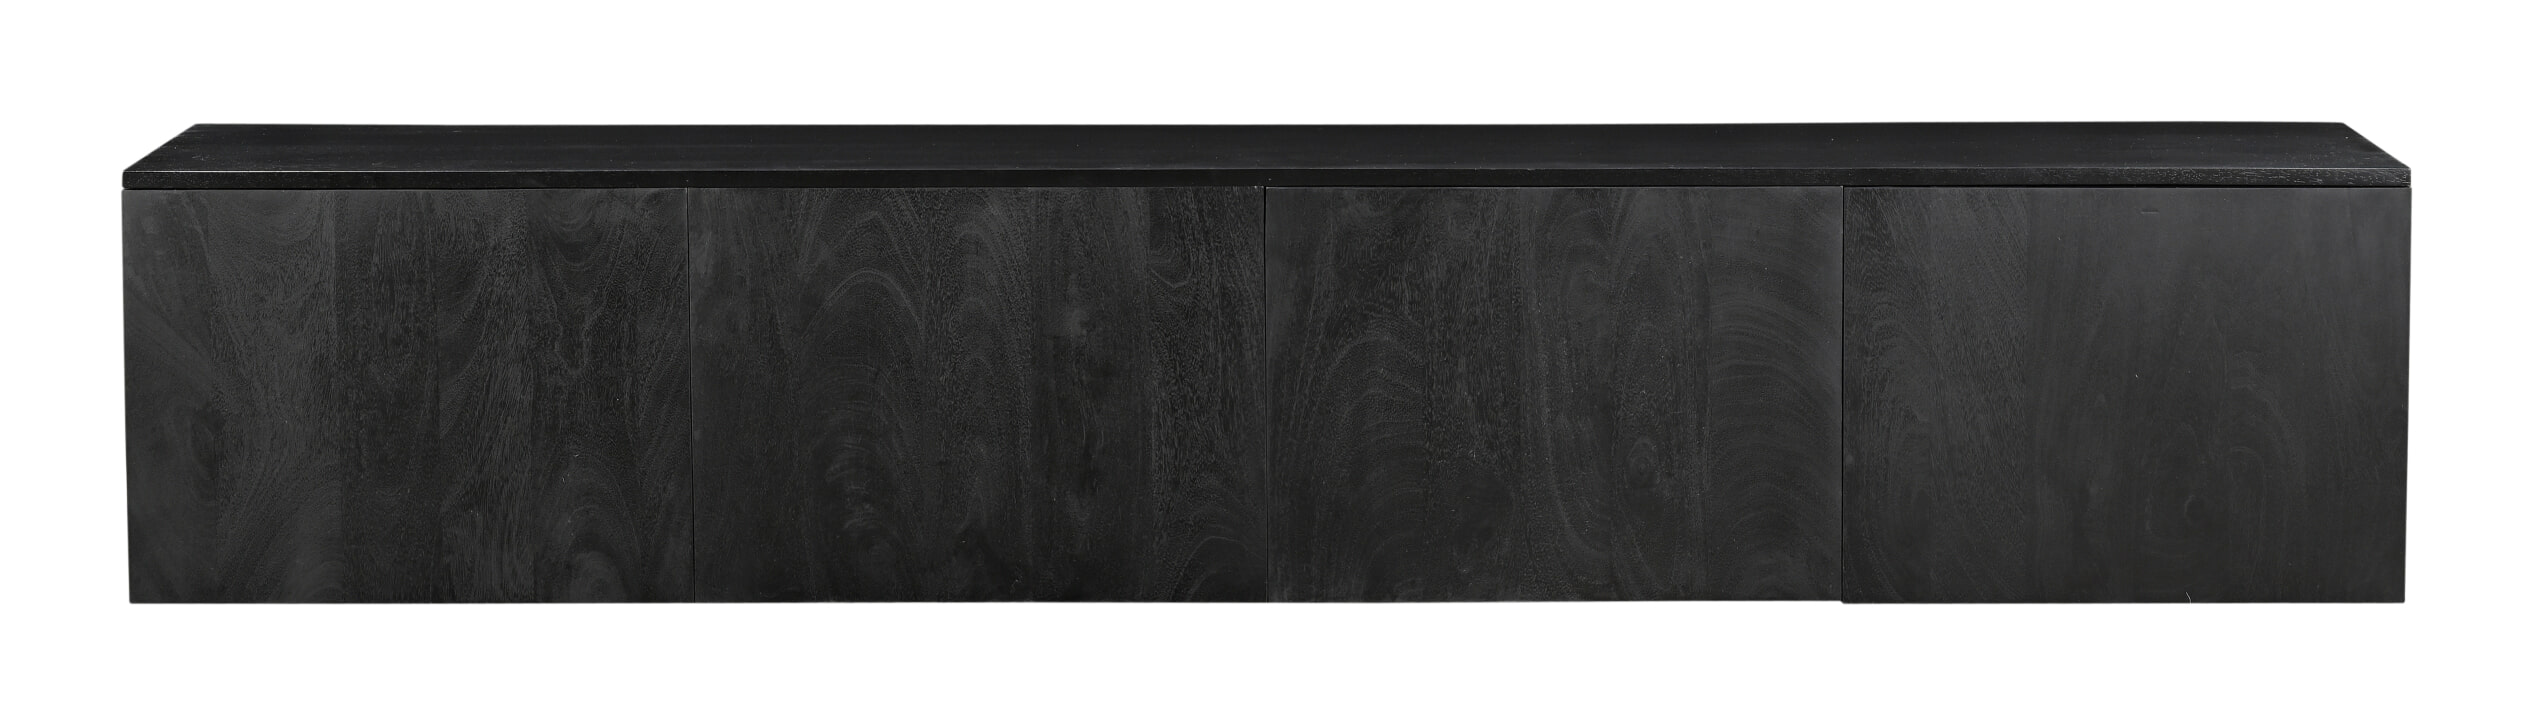 Livingfurn TV-meubel 'Pendura' Mangohout, 210cm, kleur Zwart